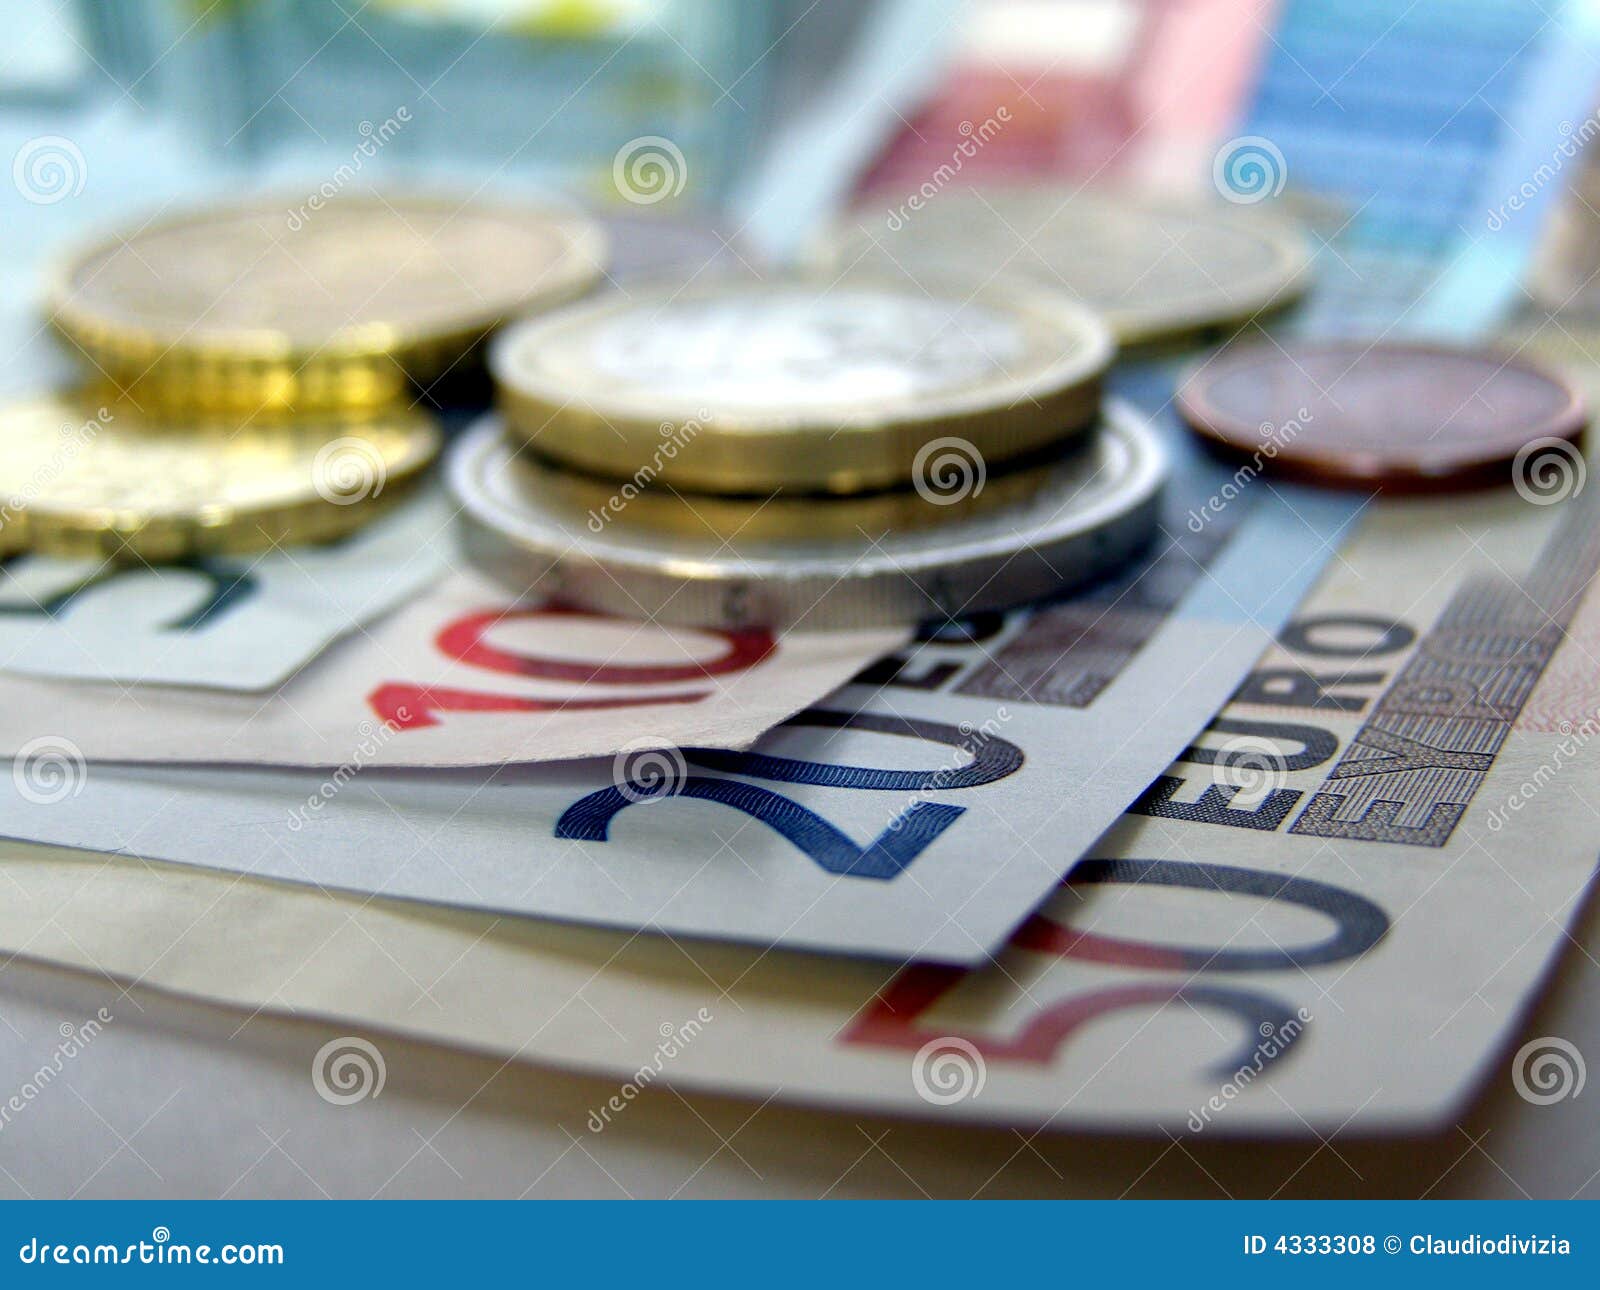 欧元纸币简述，聊聊欧元的那些事儿_哔哩哔哩 (゜-゜)つロ 干杯~-bilibili